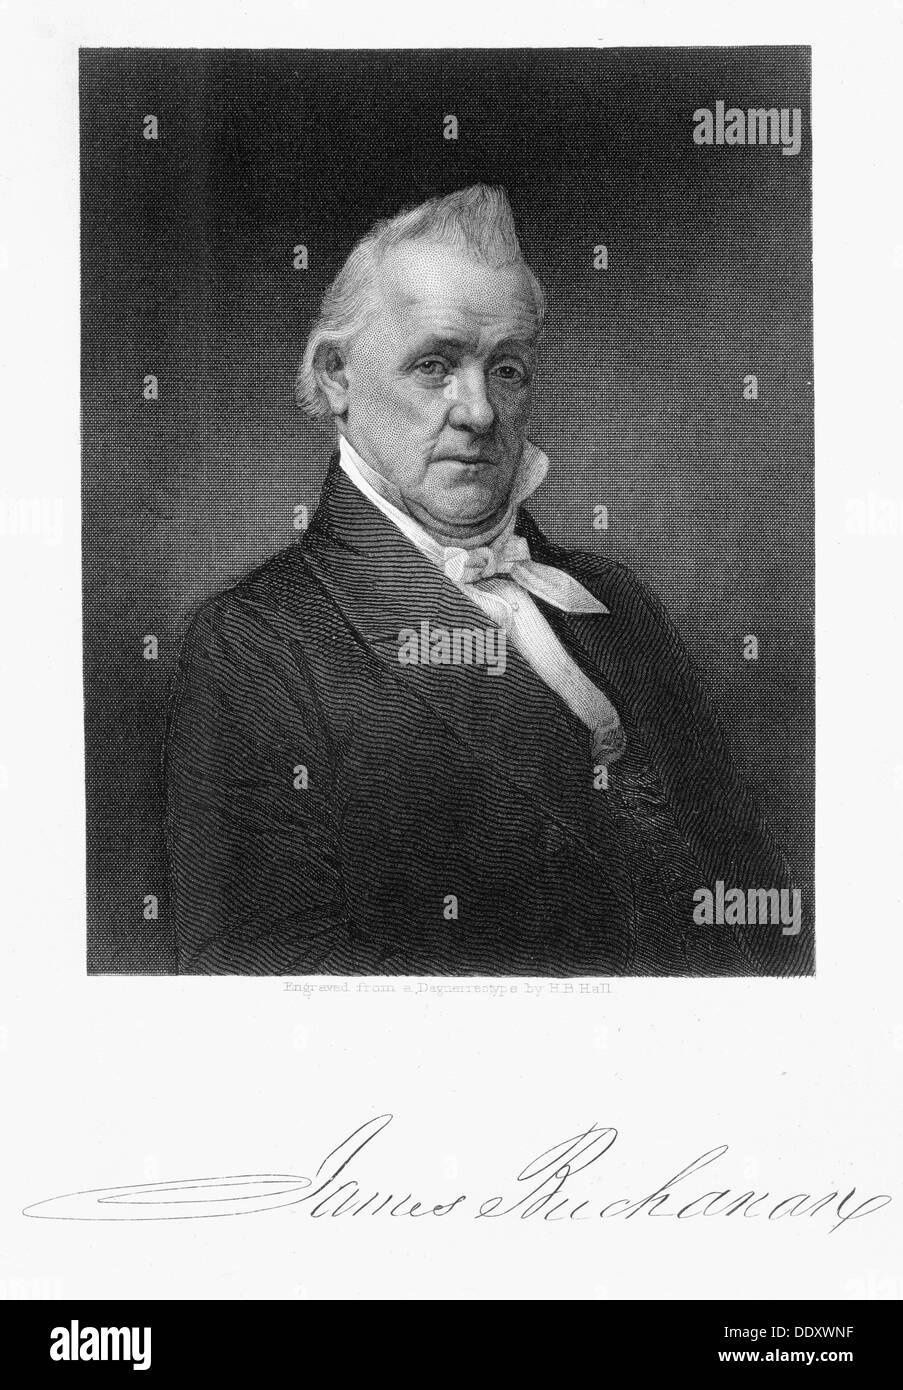 James Buchanan, 15th President of the United States of America, 19th century. Artist: Henry Bryan Hall I Stock Photo